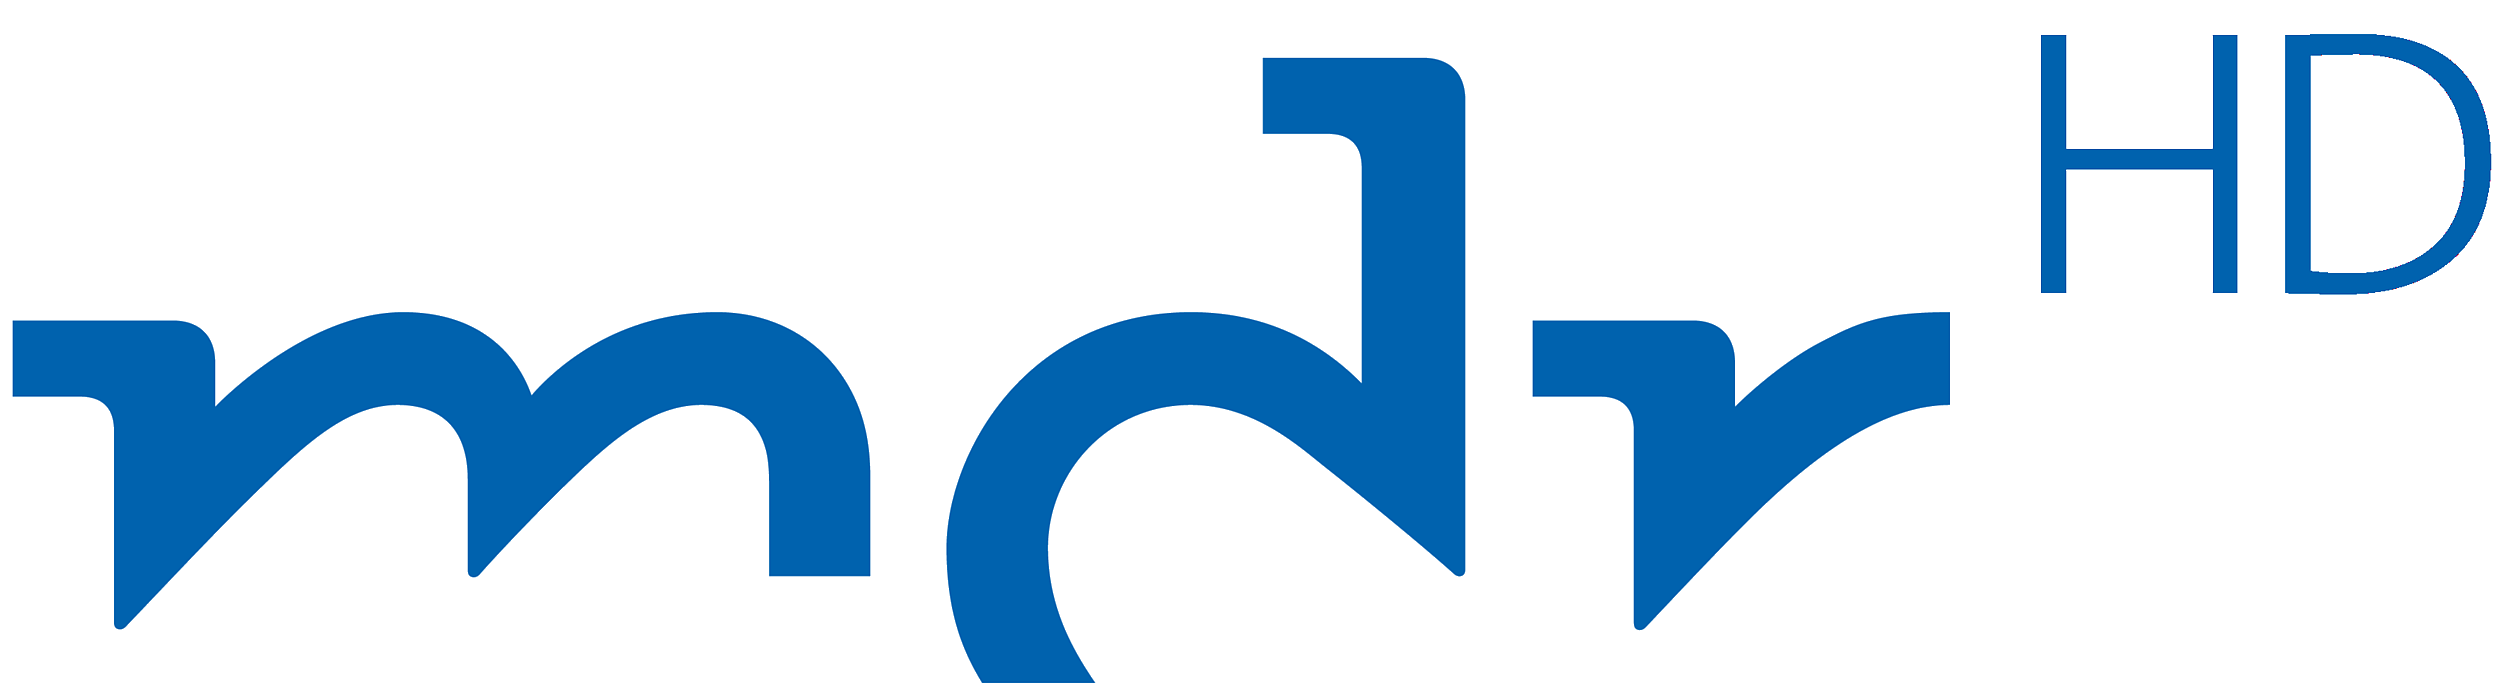 MDR Logo - Mdr Fernsehen HD Logo 2017.png